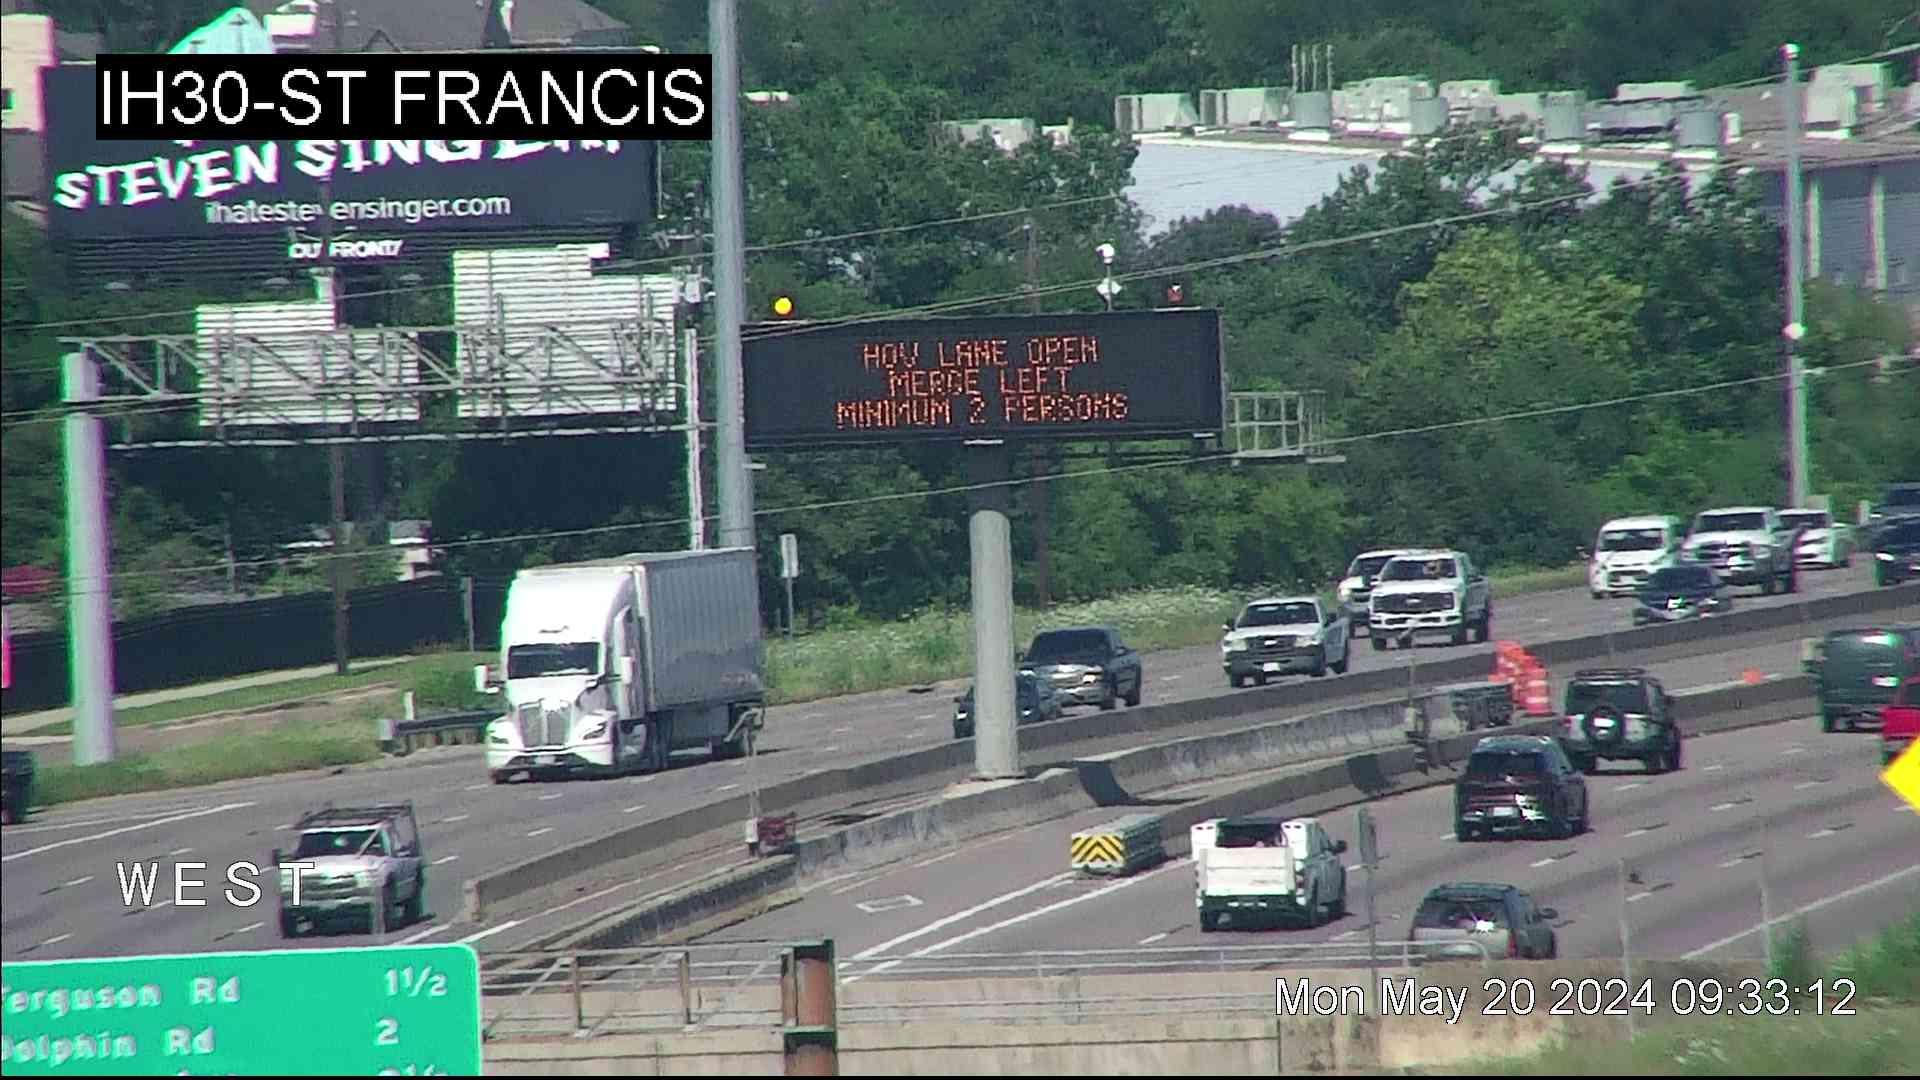 Dallas › East: I-30 @ St Francis Traffic Camera